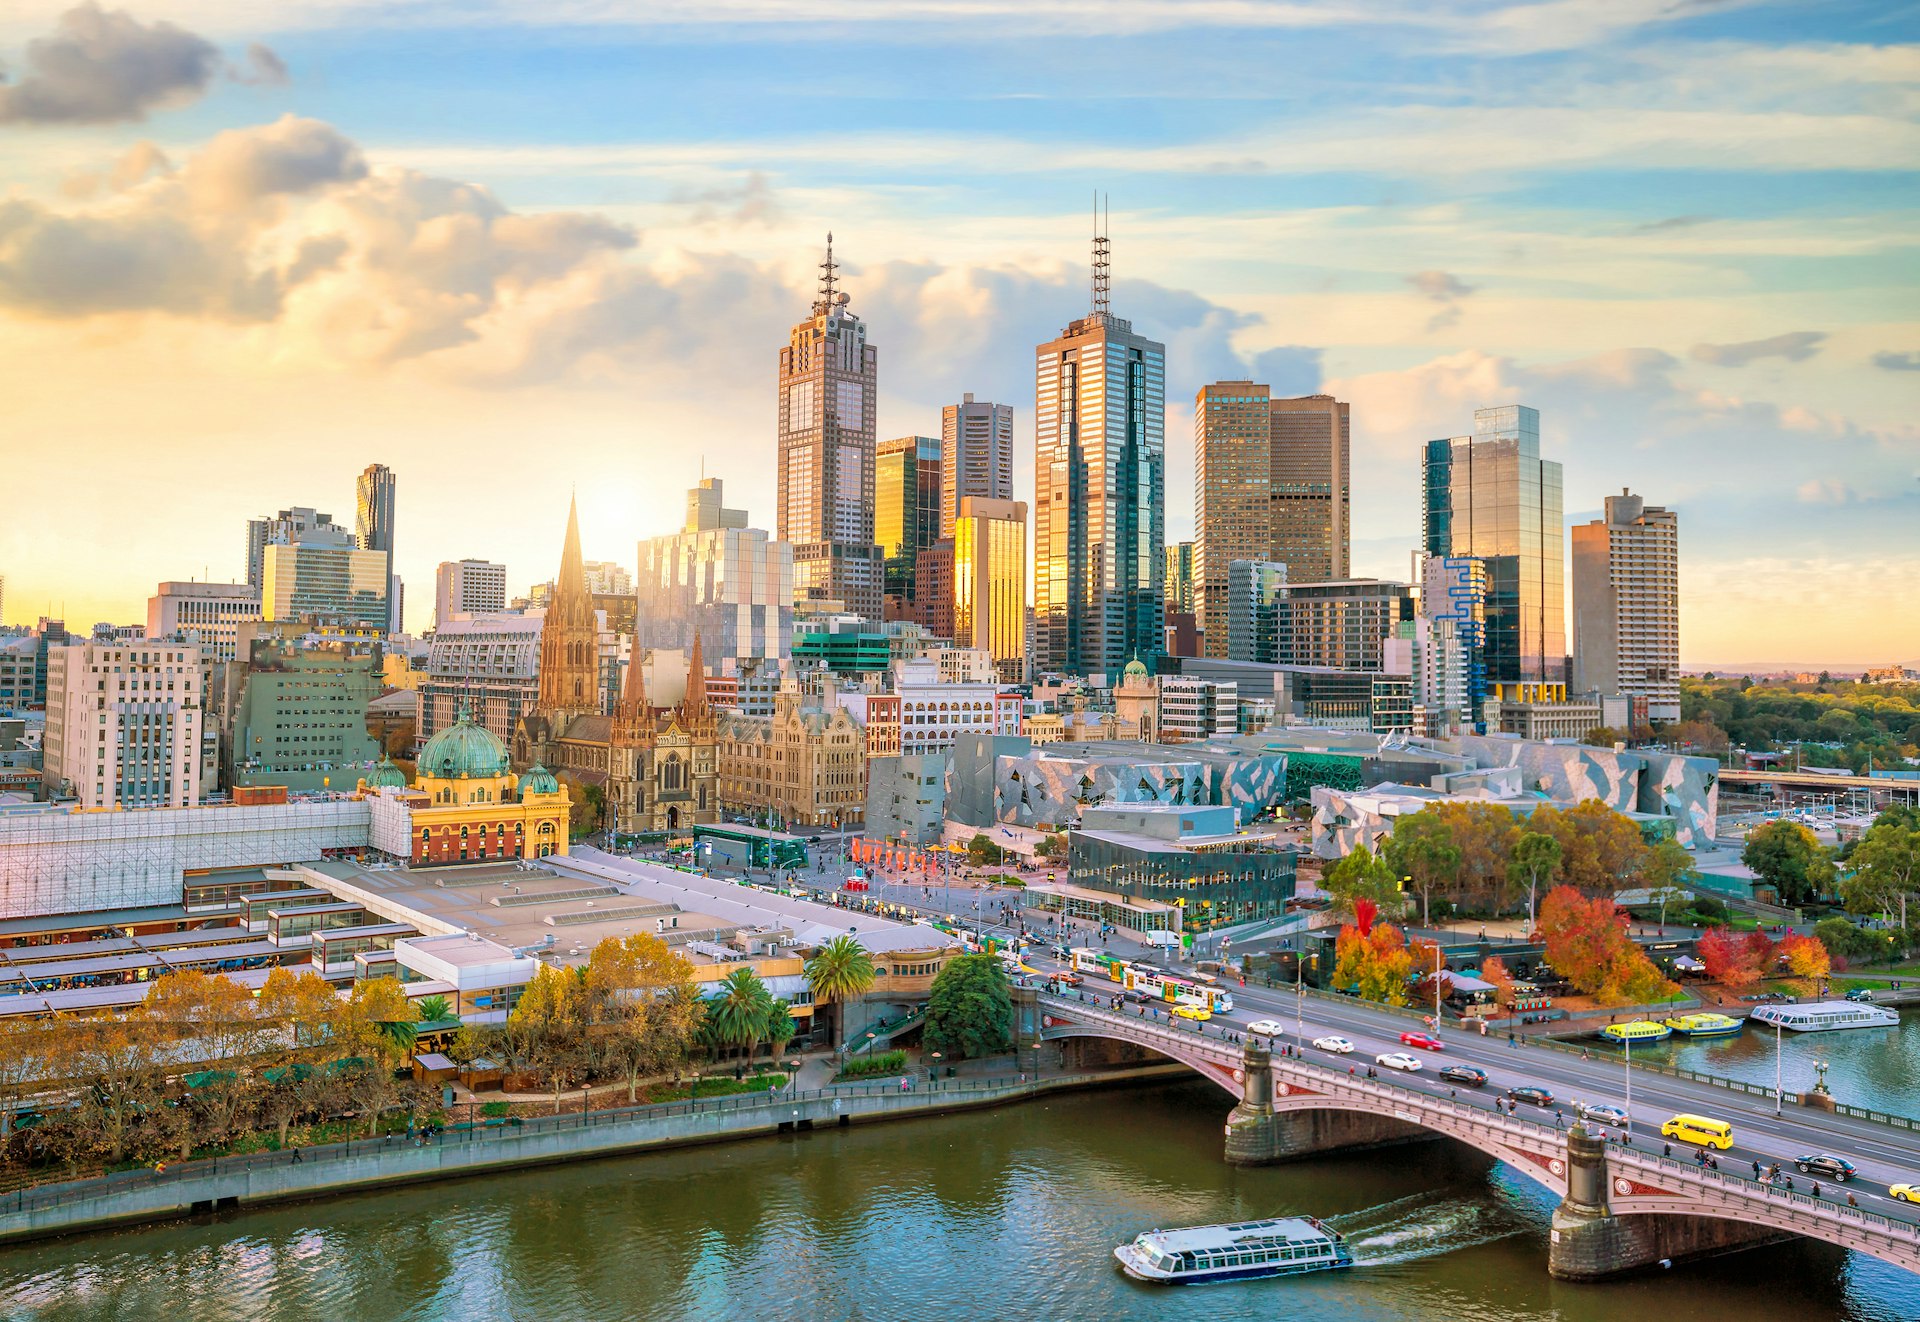 Melbourne city skyline at twilight